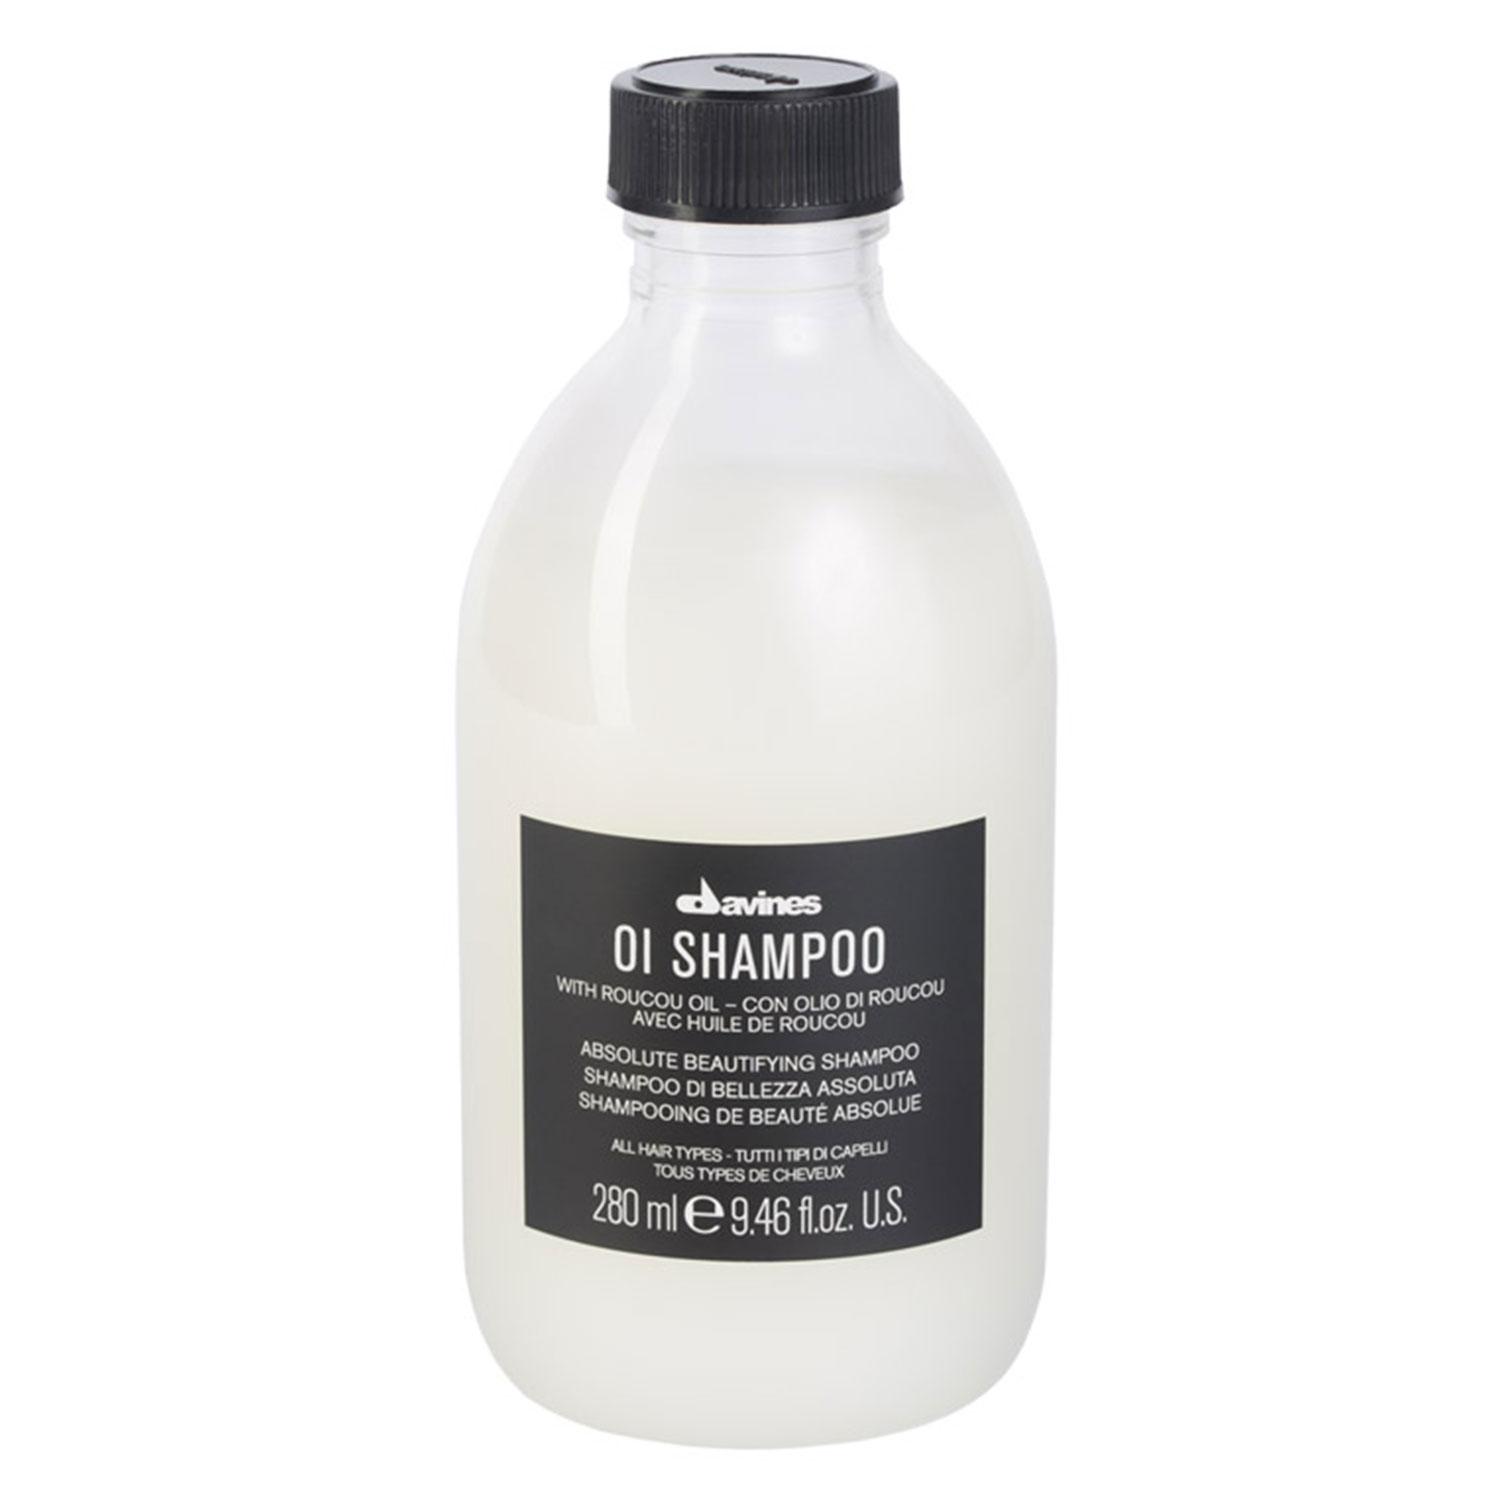 Oi - Absolute Beautifying Shampoo